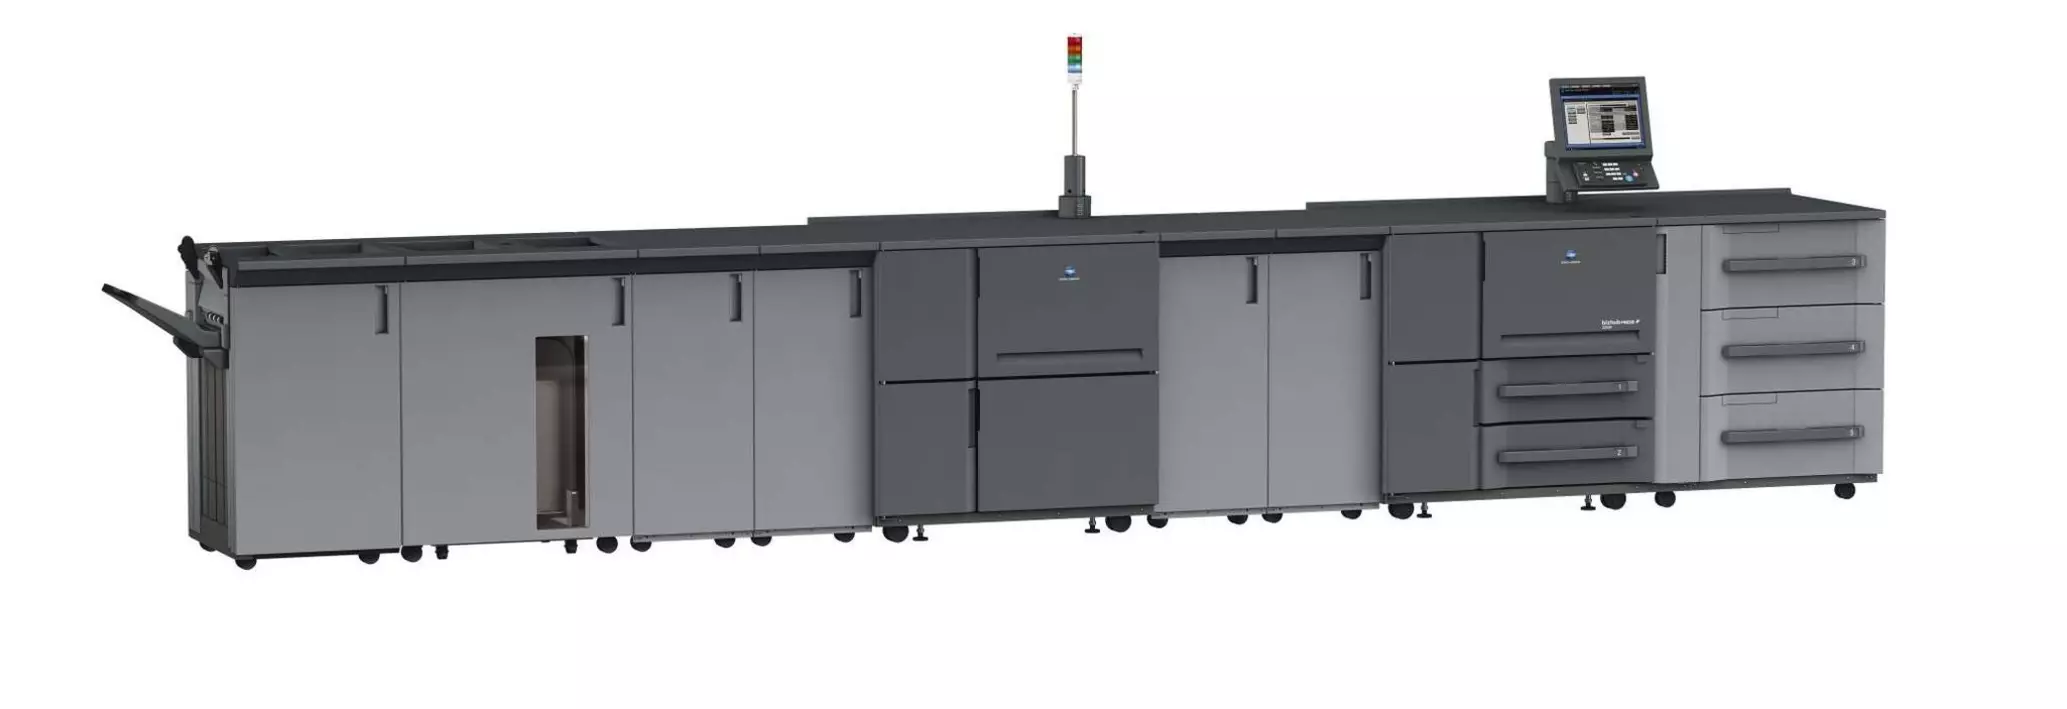 Konica Minolta bizhub PRESS 2250p professionel printer